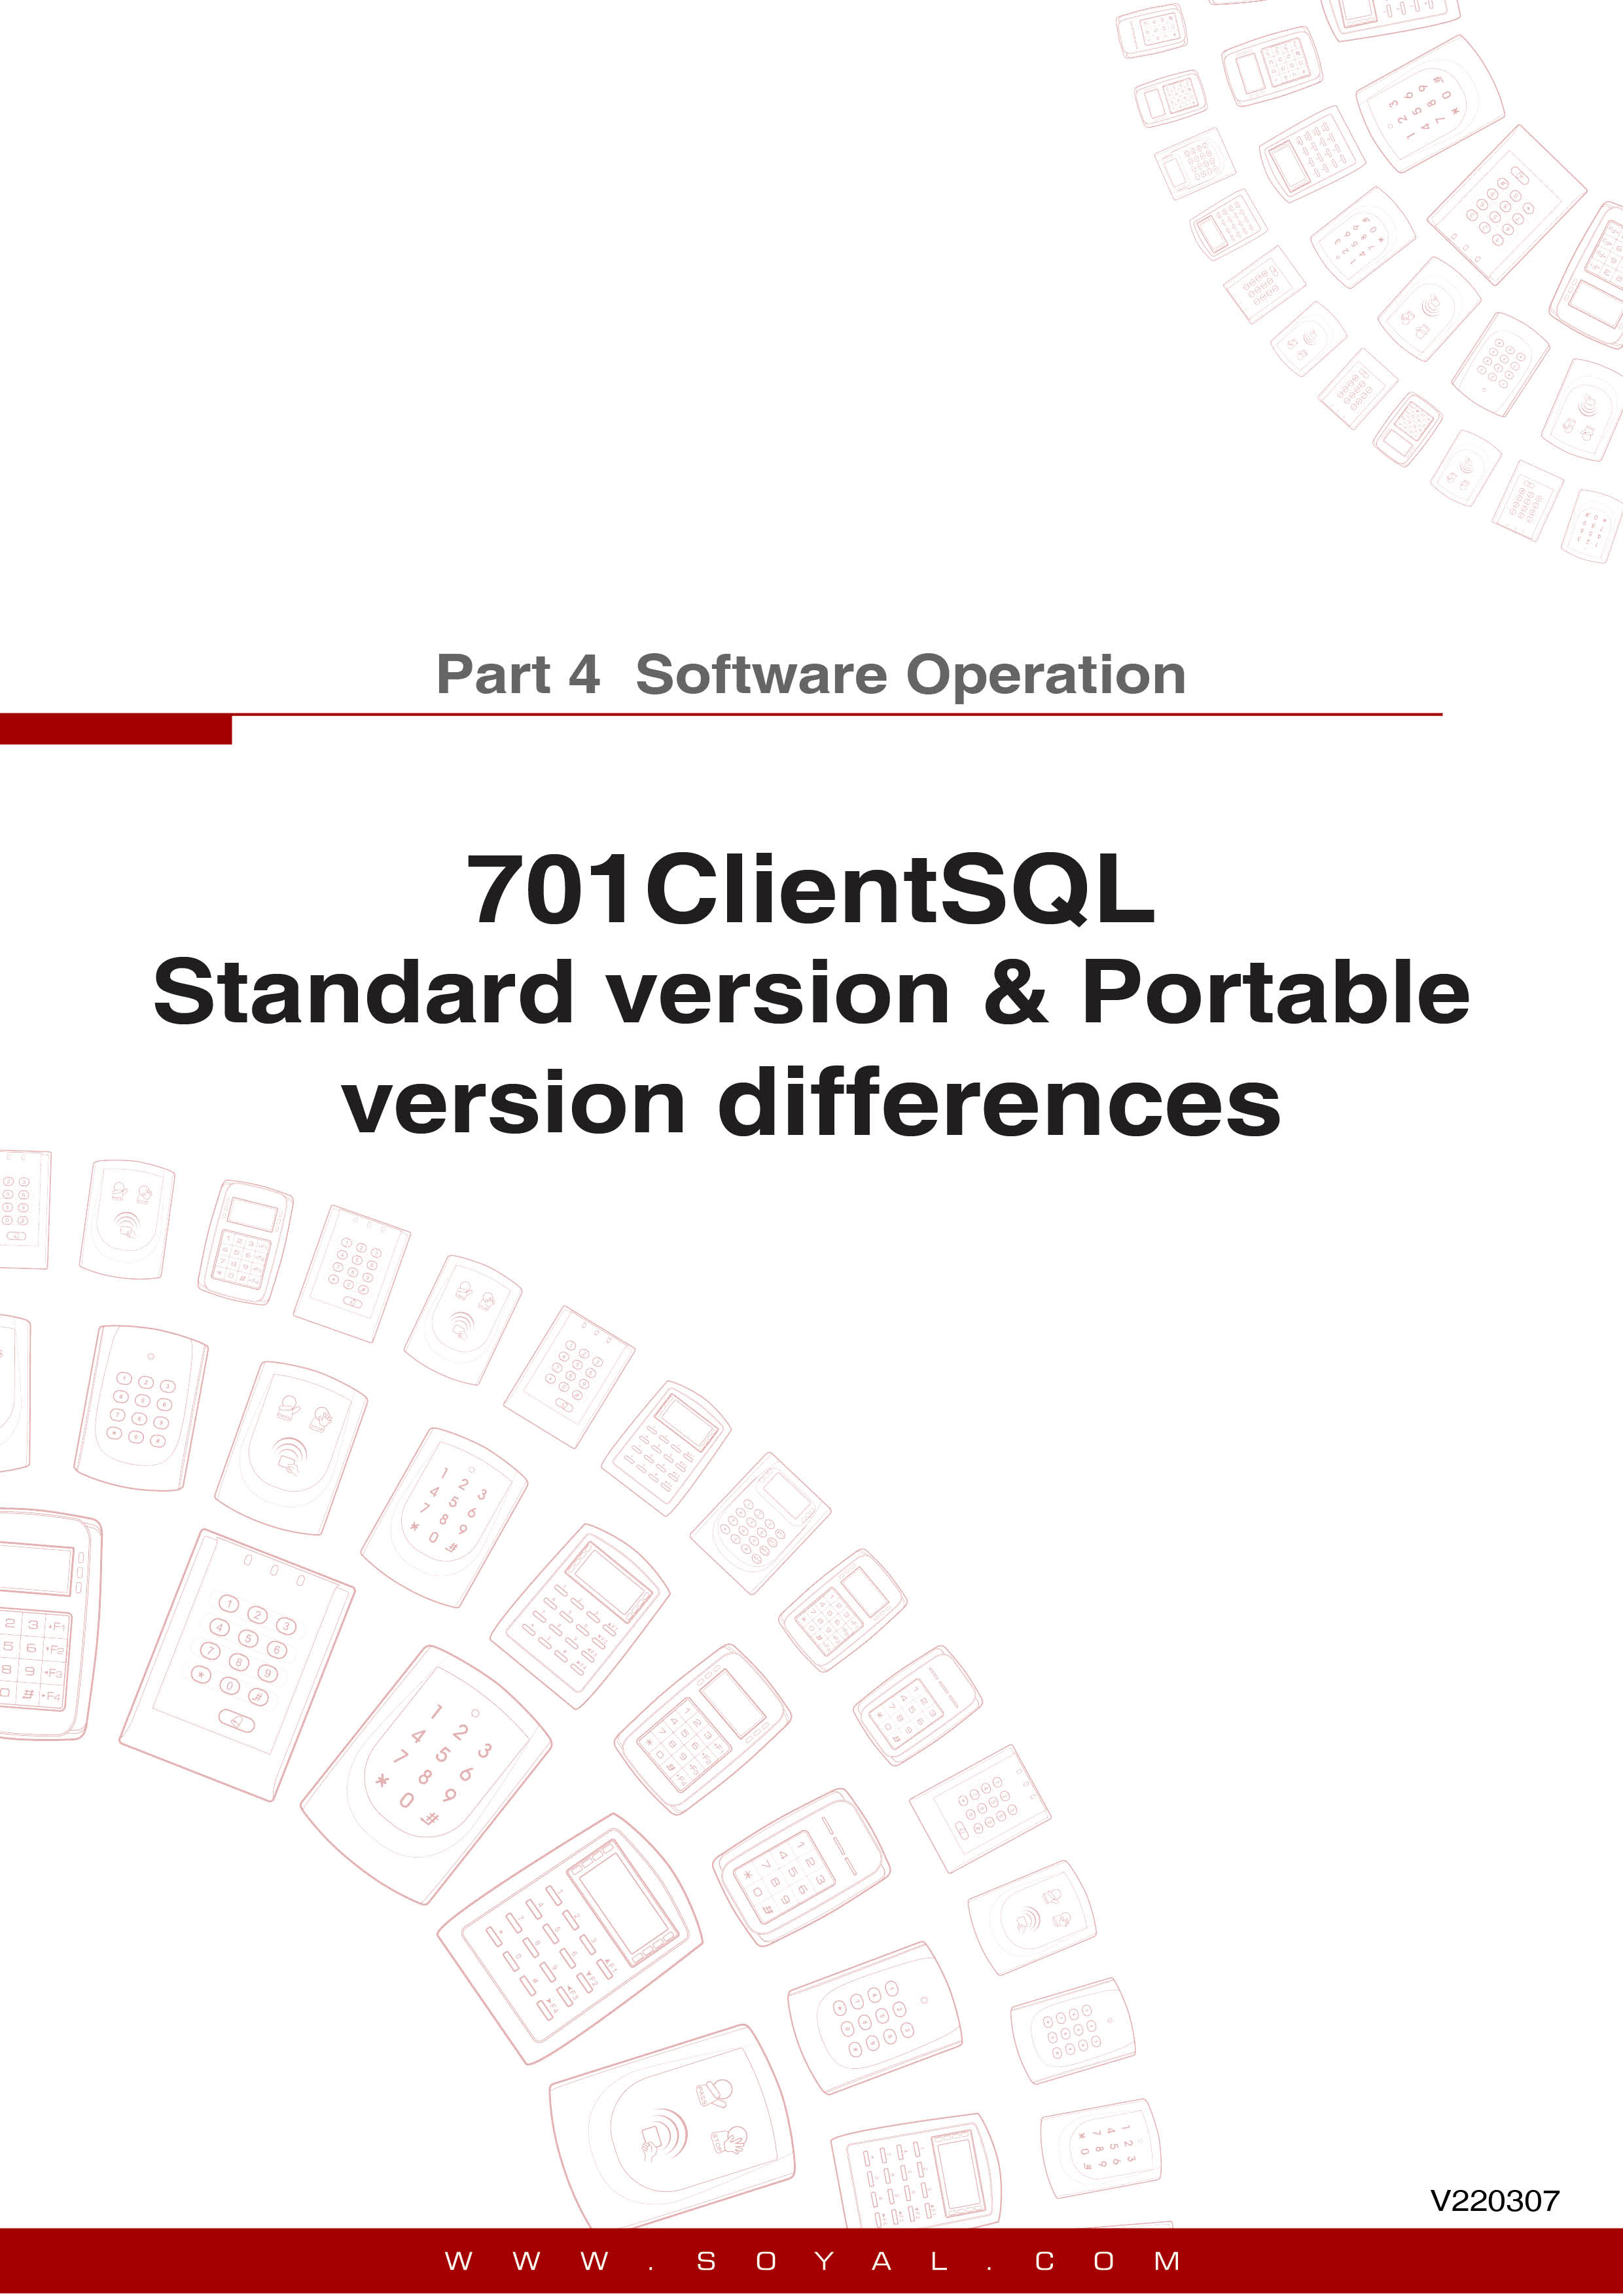 701ClientSQL Standard version & Portable version differences(圖)